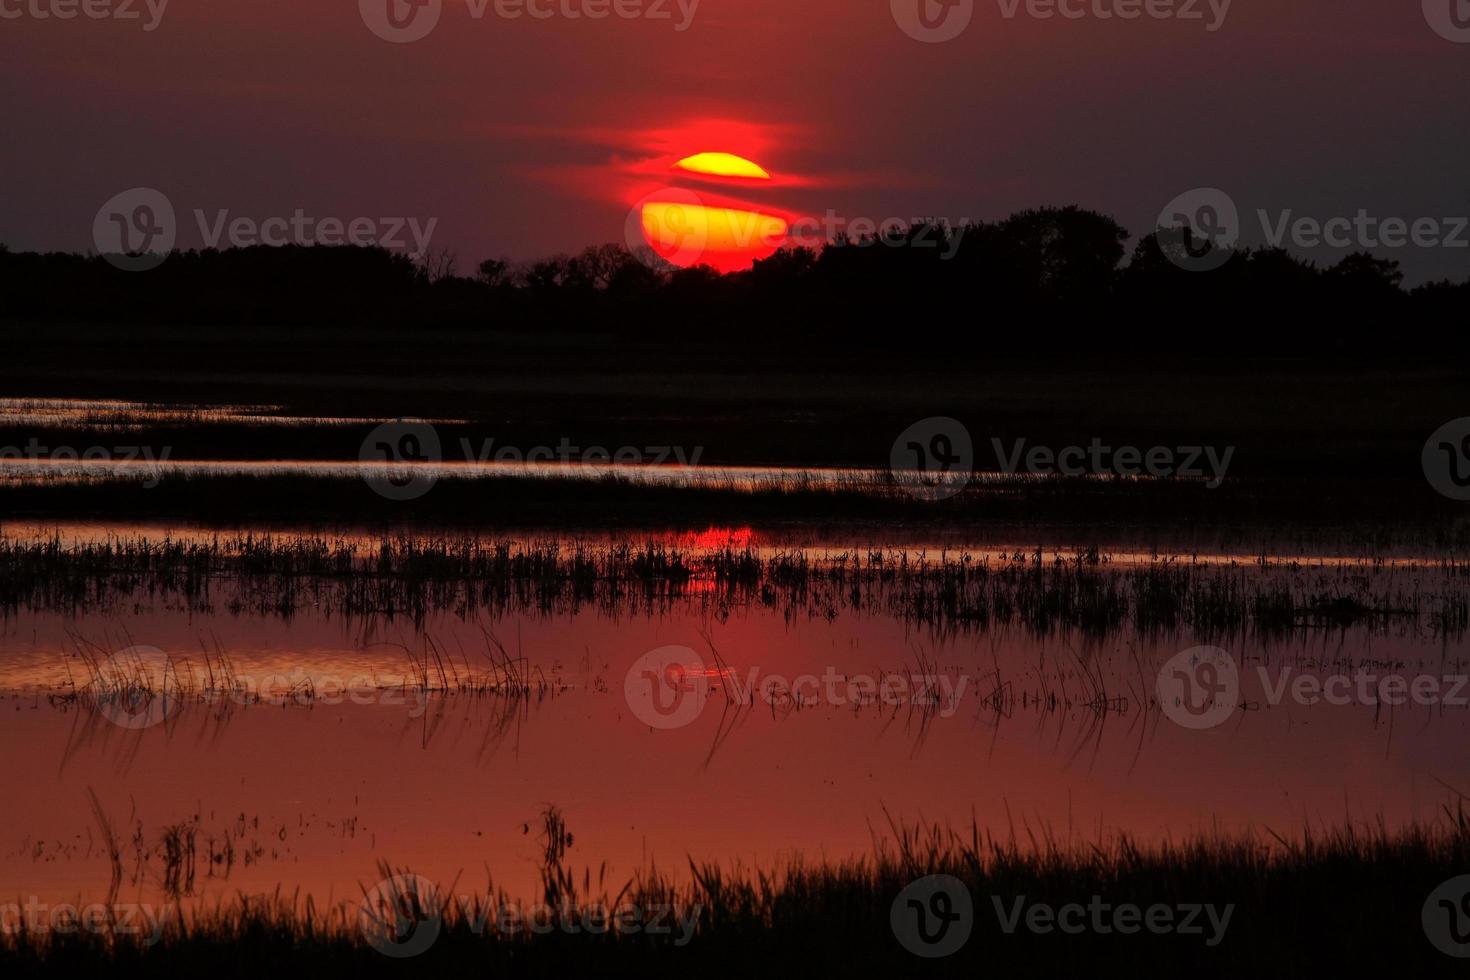 Setting sun reflecting off Saskatchewan pond photo